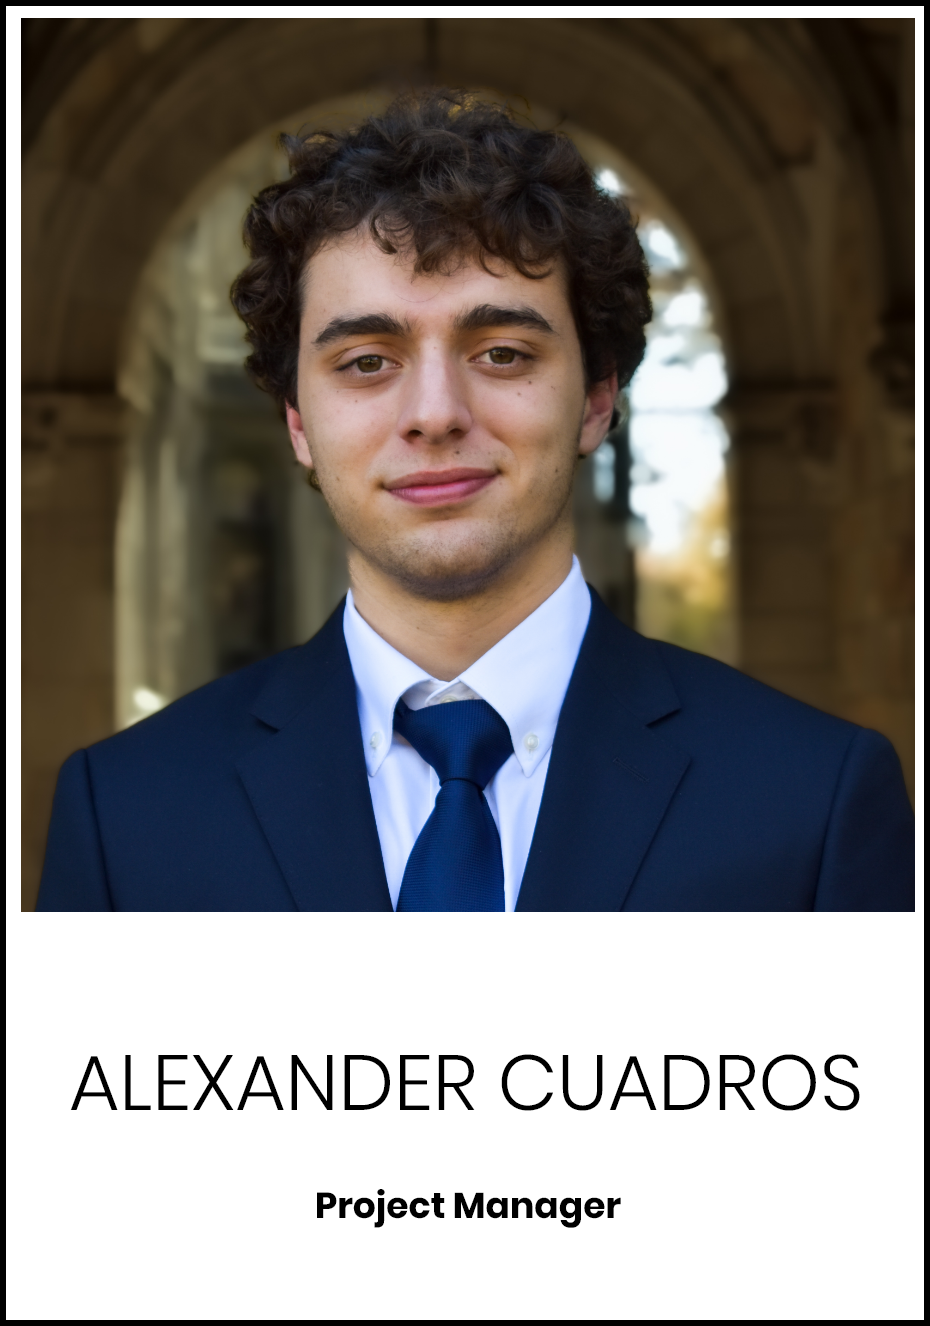 Alexander Cuadros